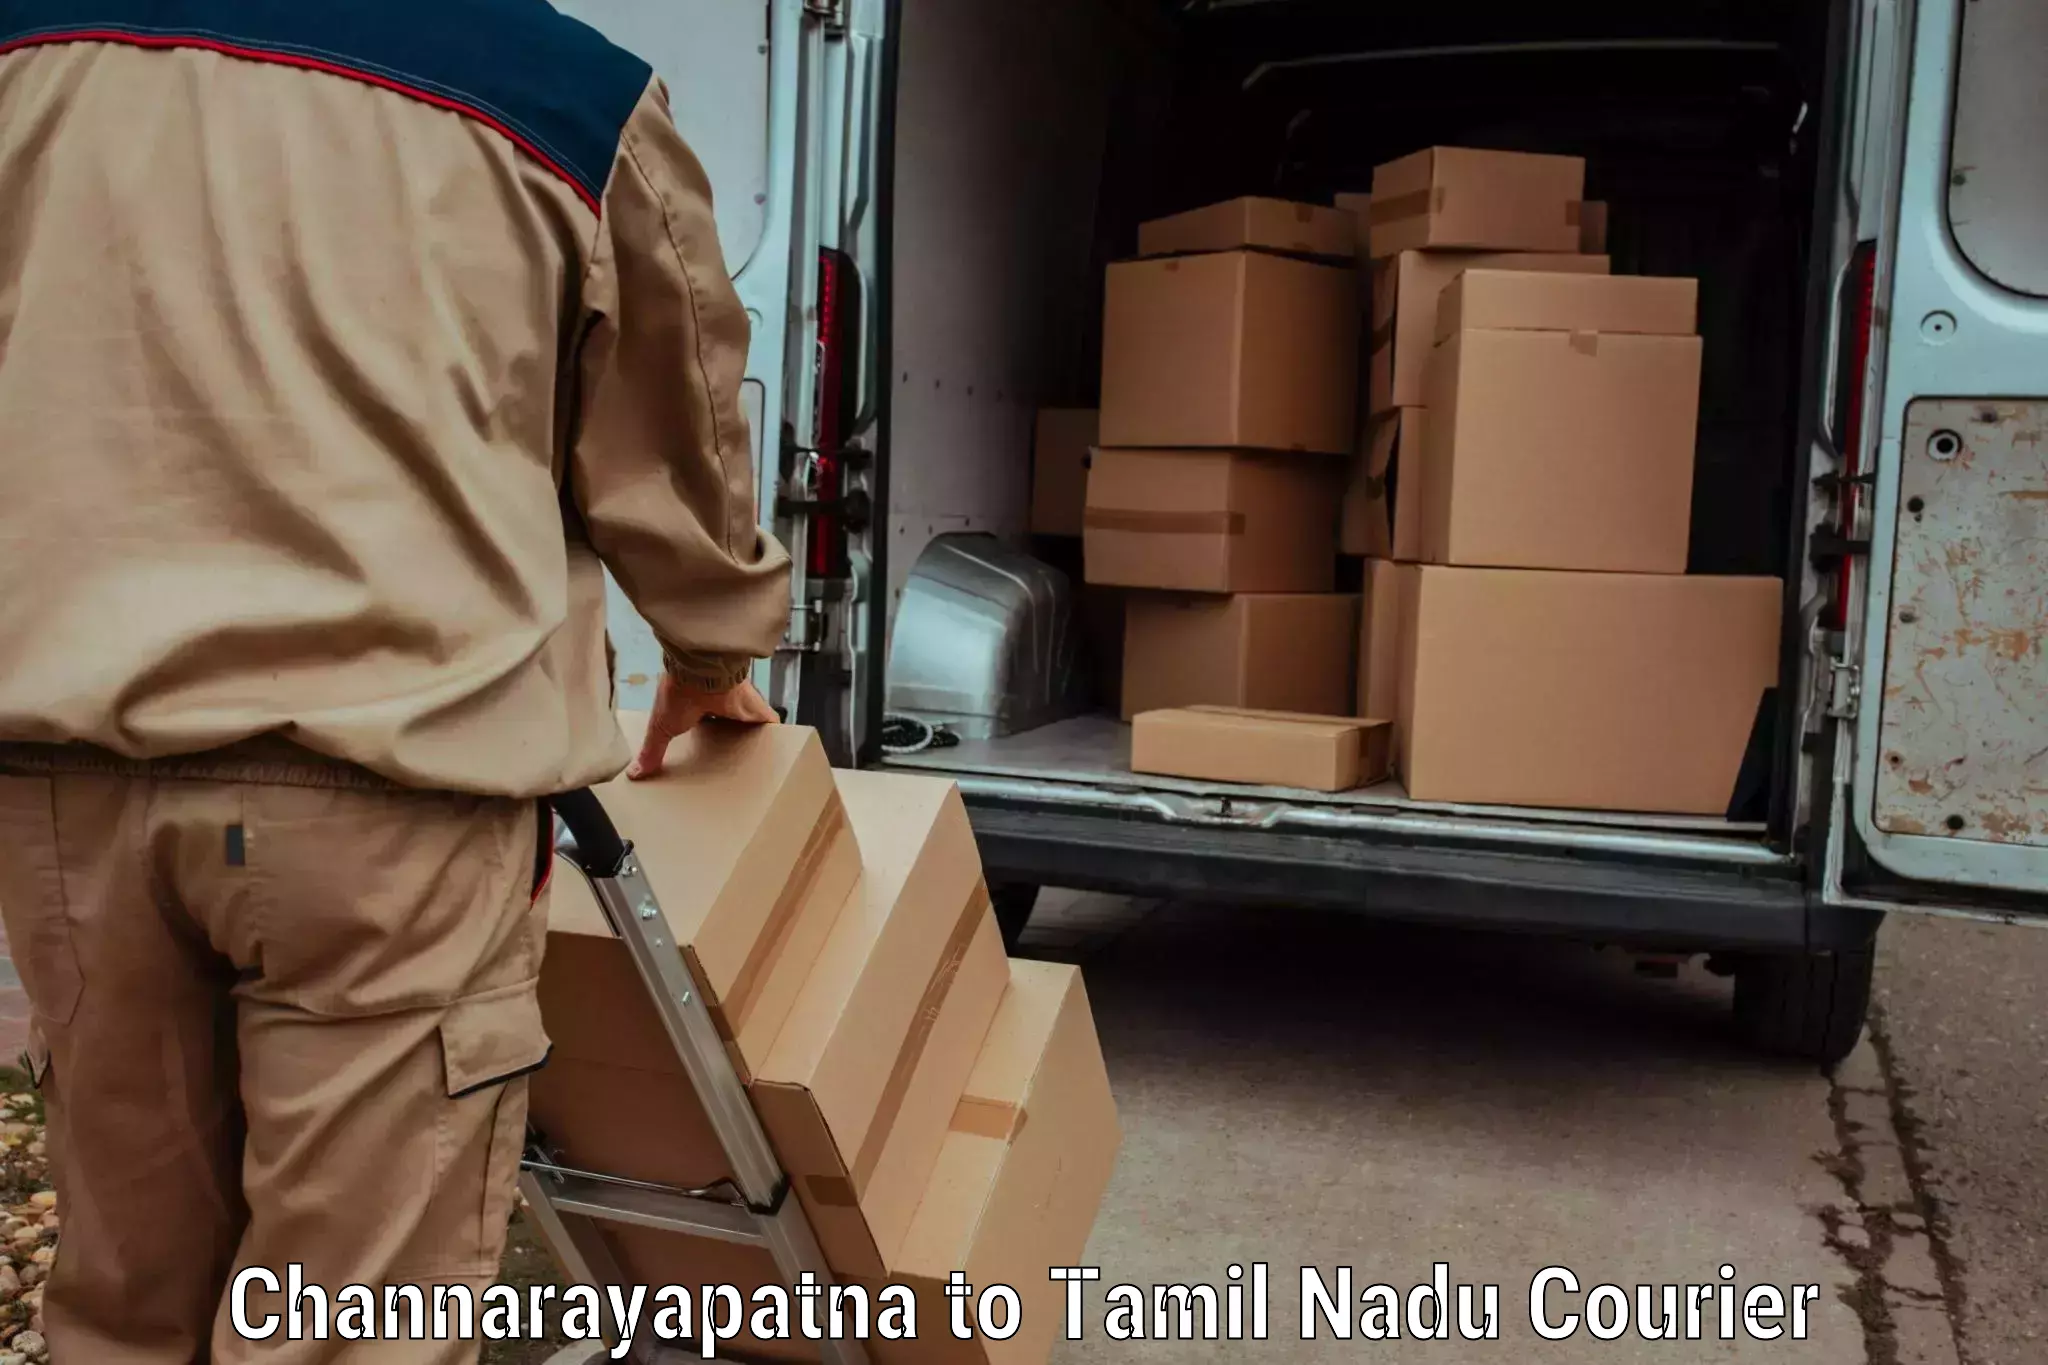 Global courier networks Channarayapatna to Perambalur